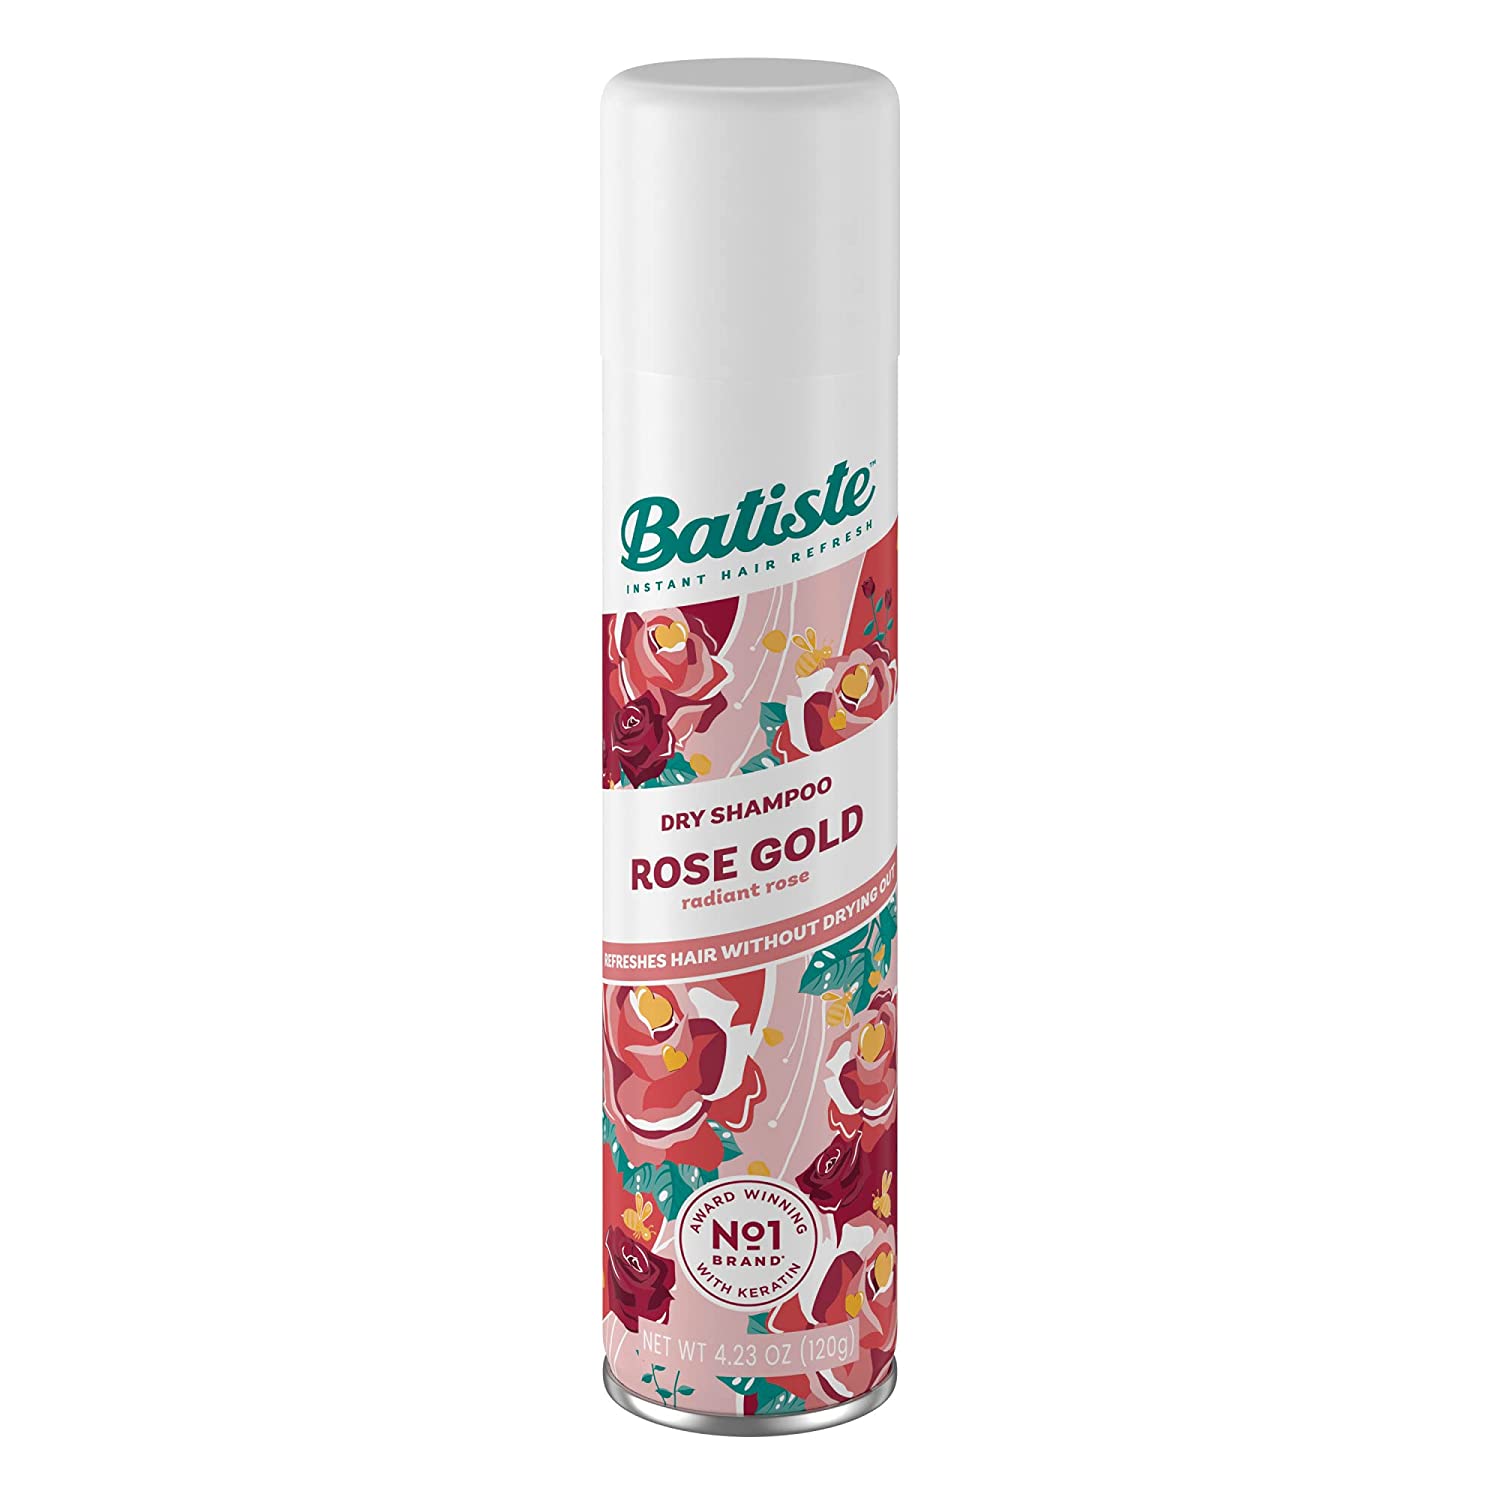 Batiste Rose Gold Dry Shampoo - 200ml